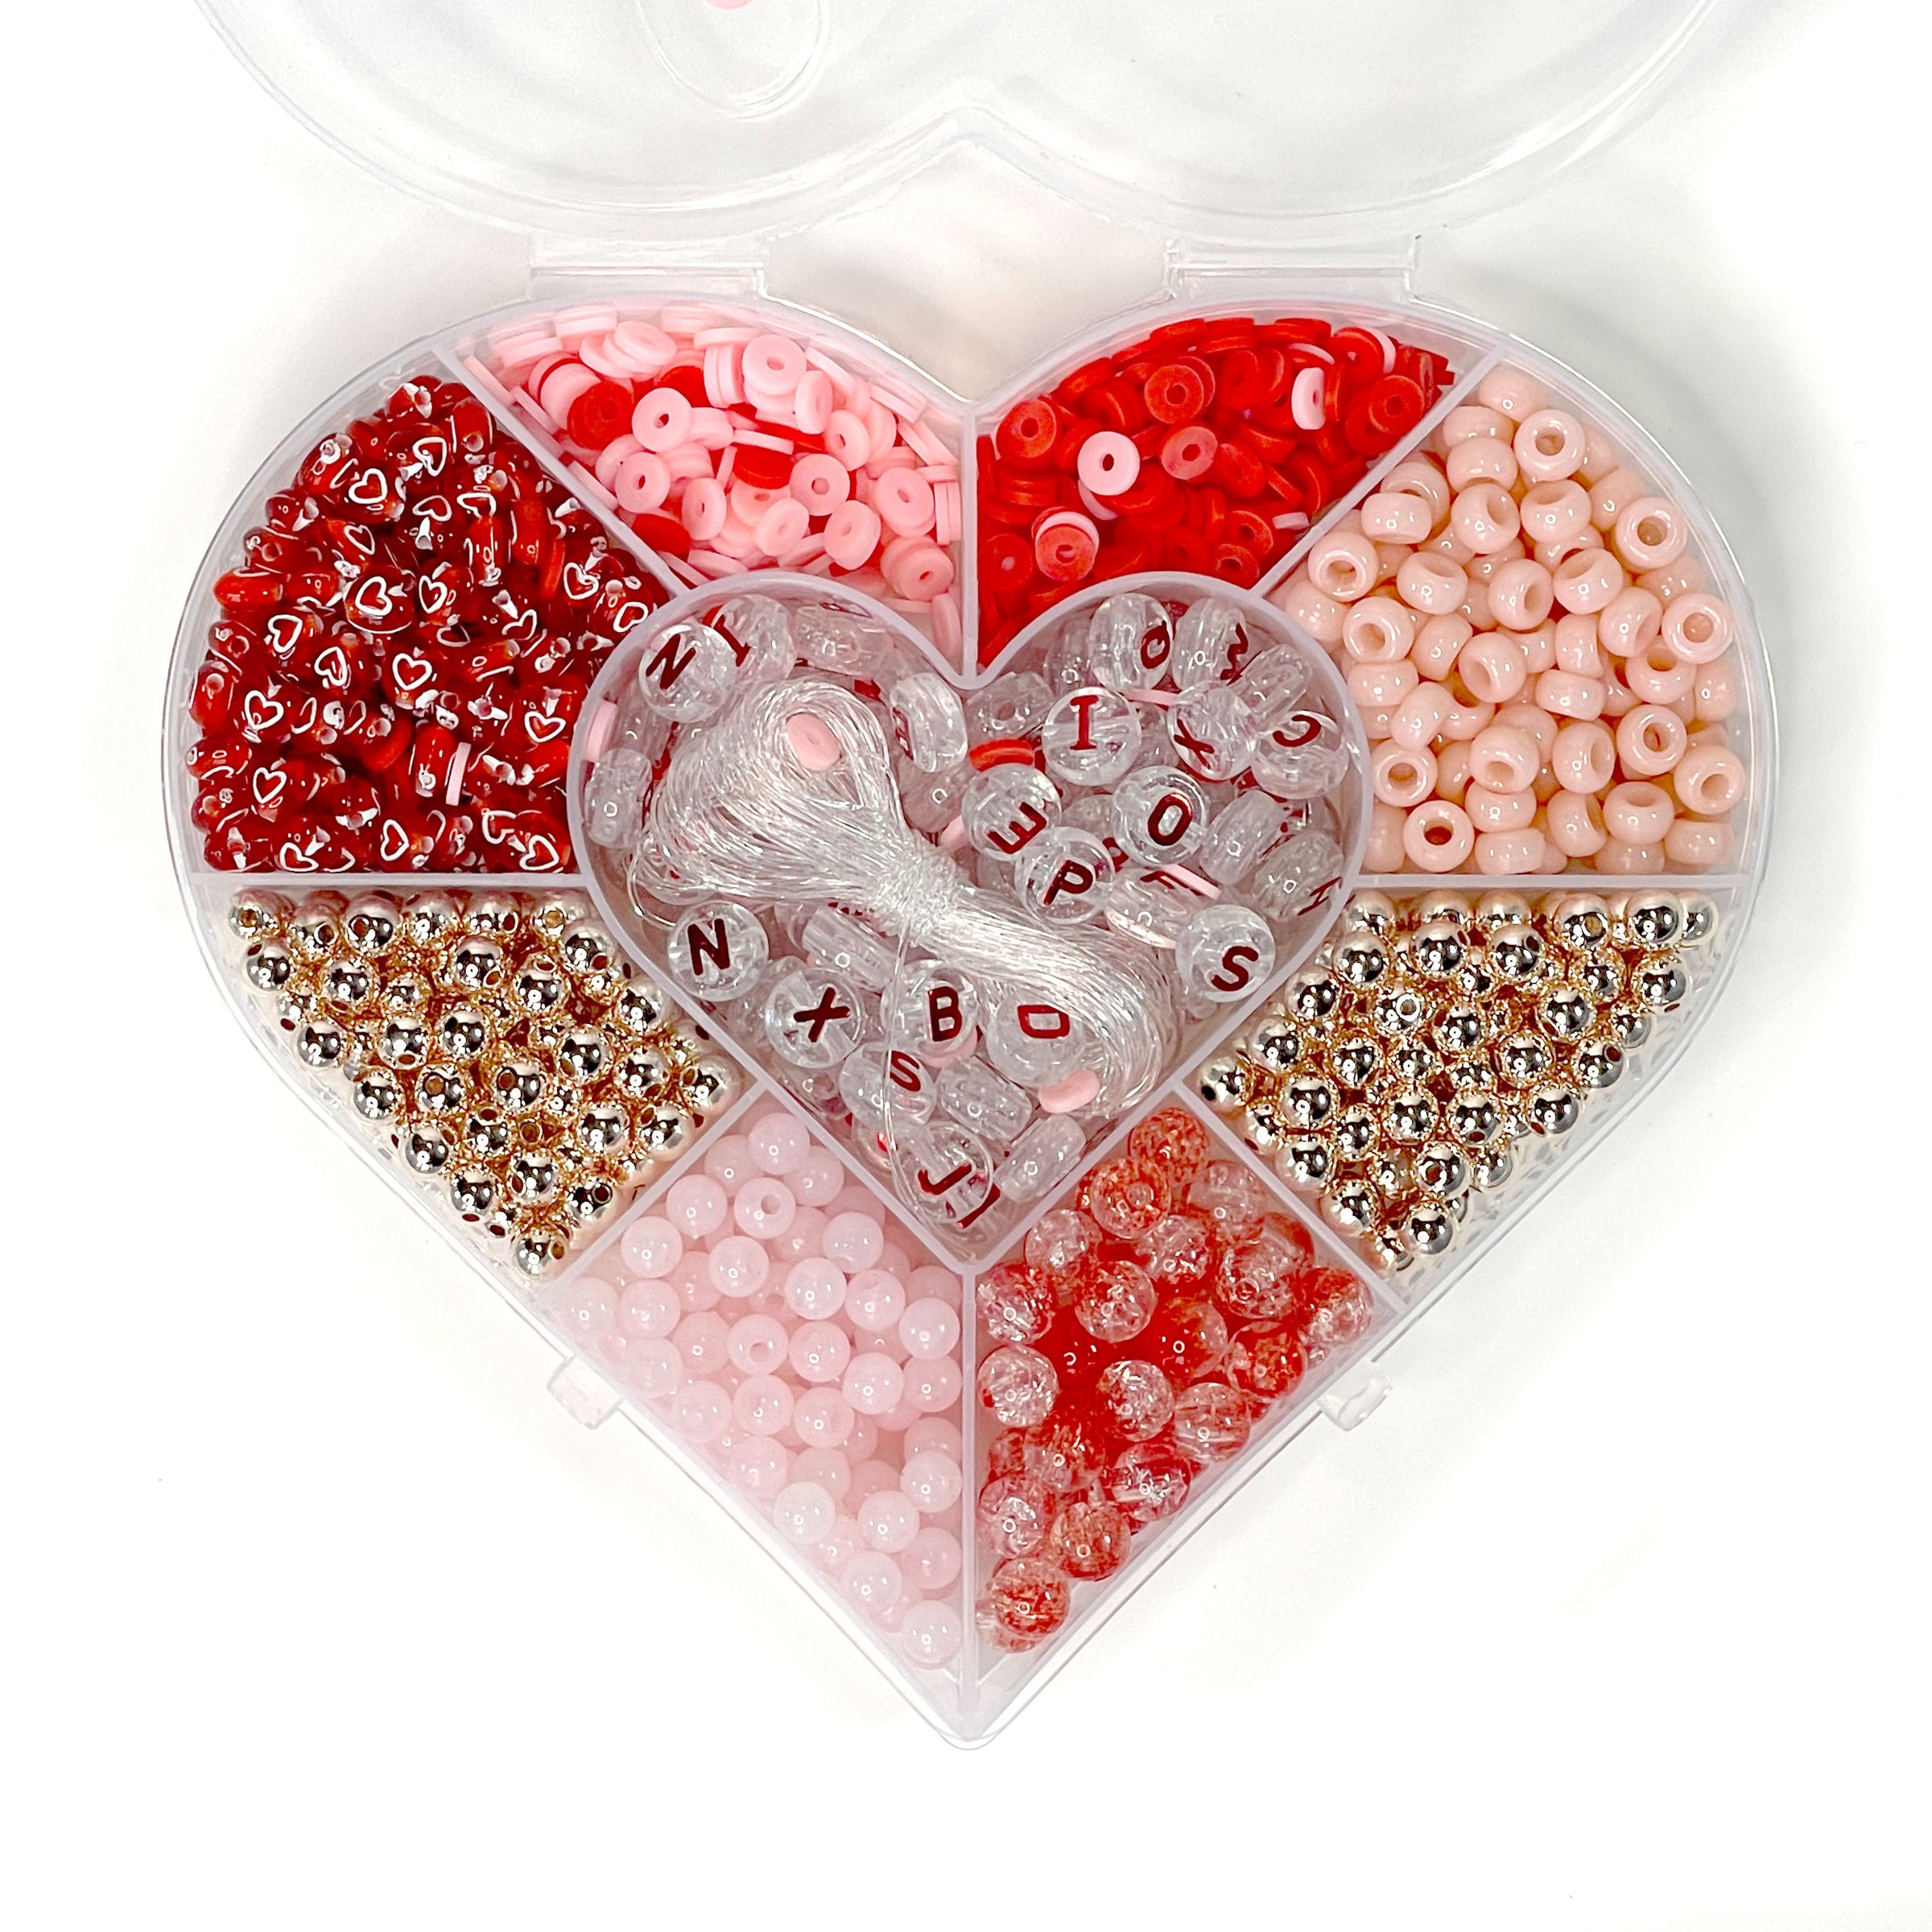 Twine and Love | Valentine's Day Beaded Earrings | Hearts Custom Earrings